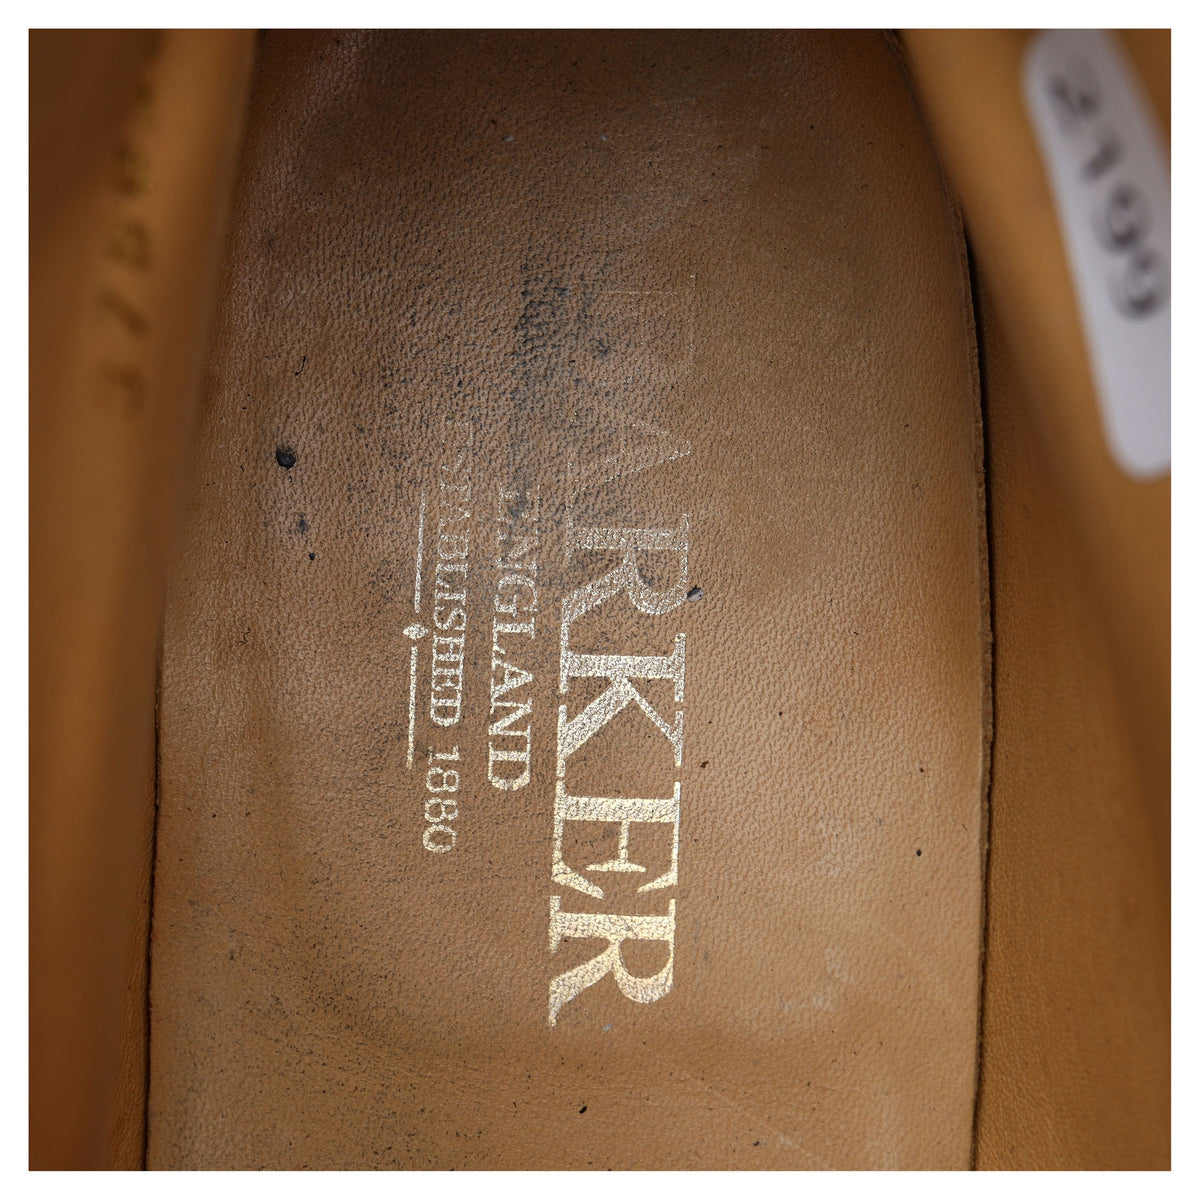 Brown Leather Chukka Boots UK 7.5 F